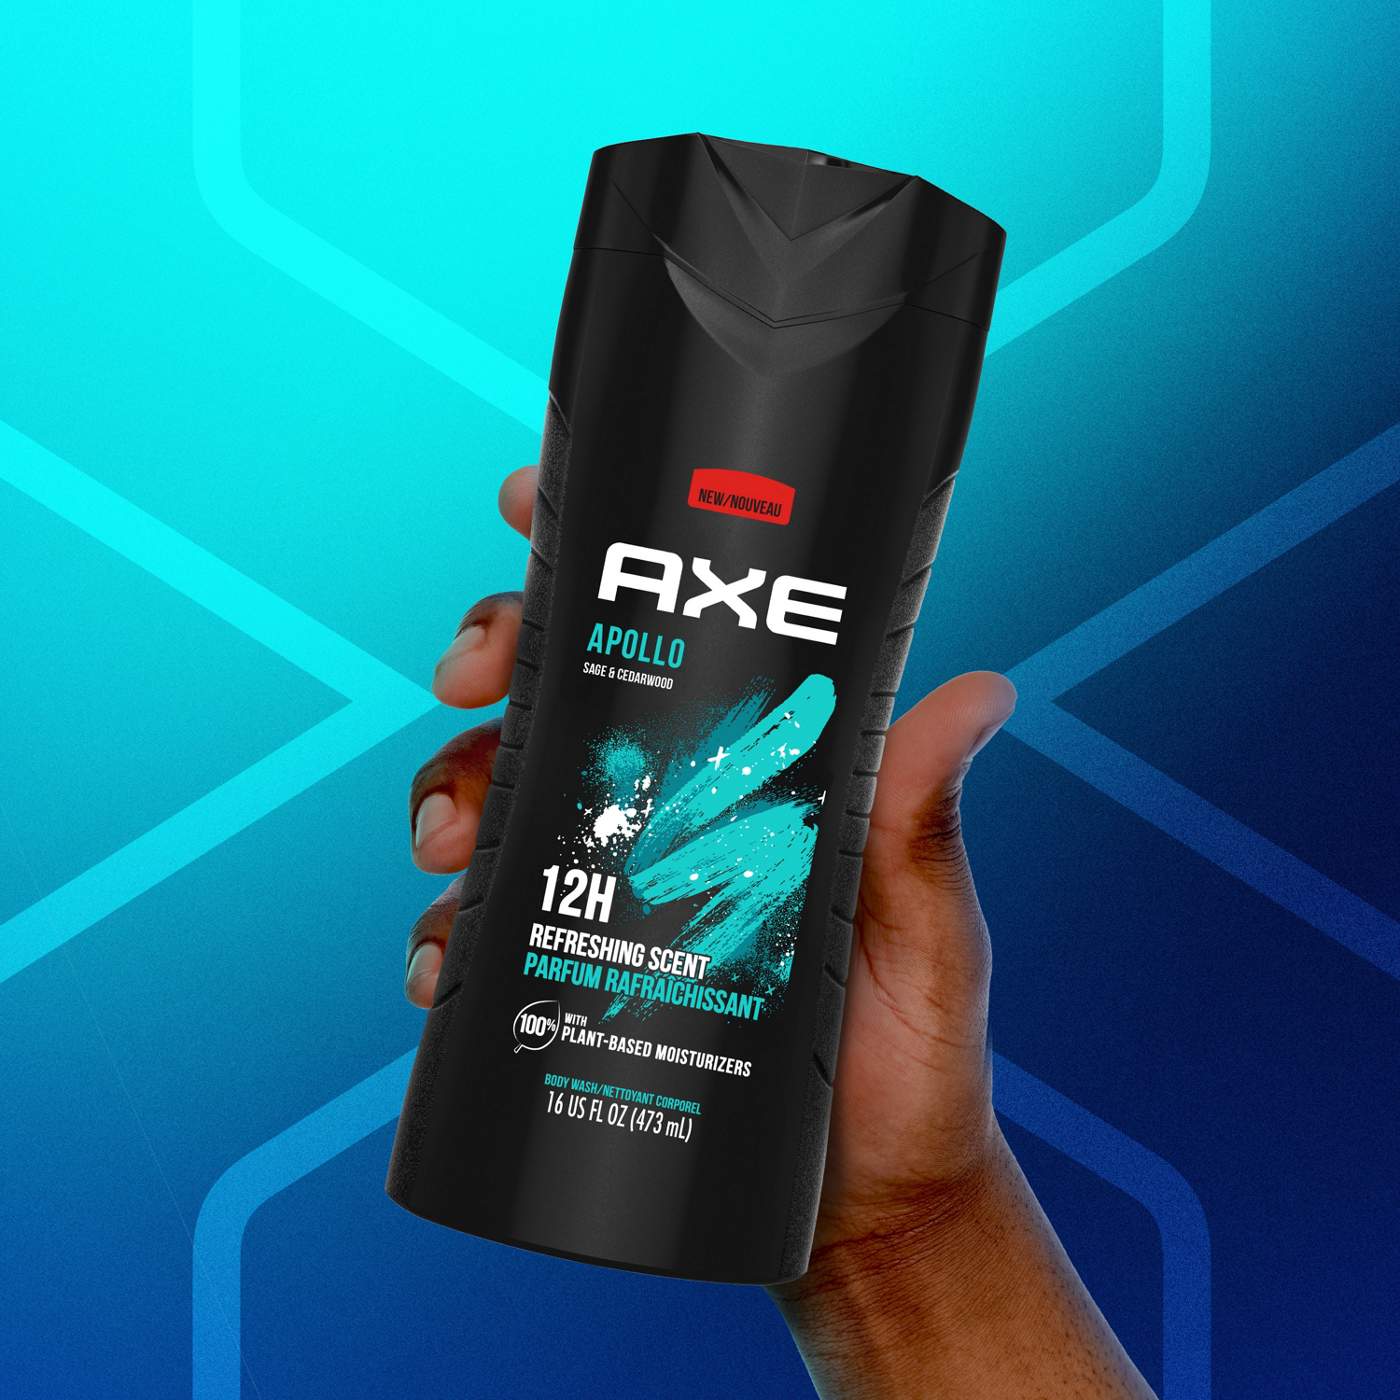 AXE Fine Fragrance Collection Body Wash For Men Aqua Bergamot - Shop Body  Wash at H-E-B